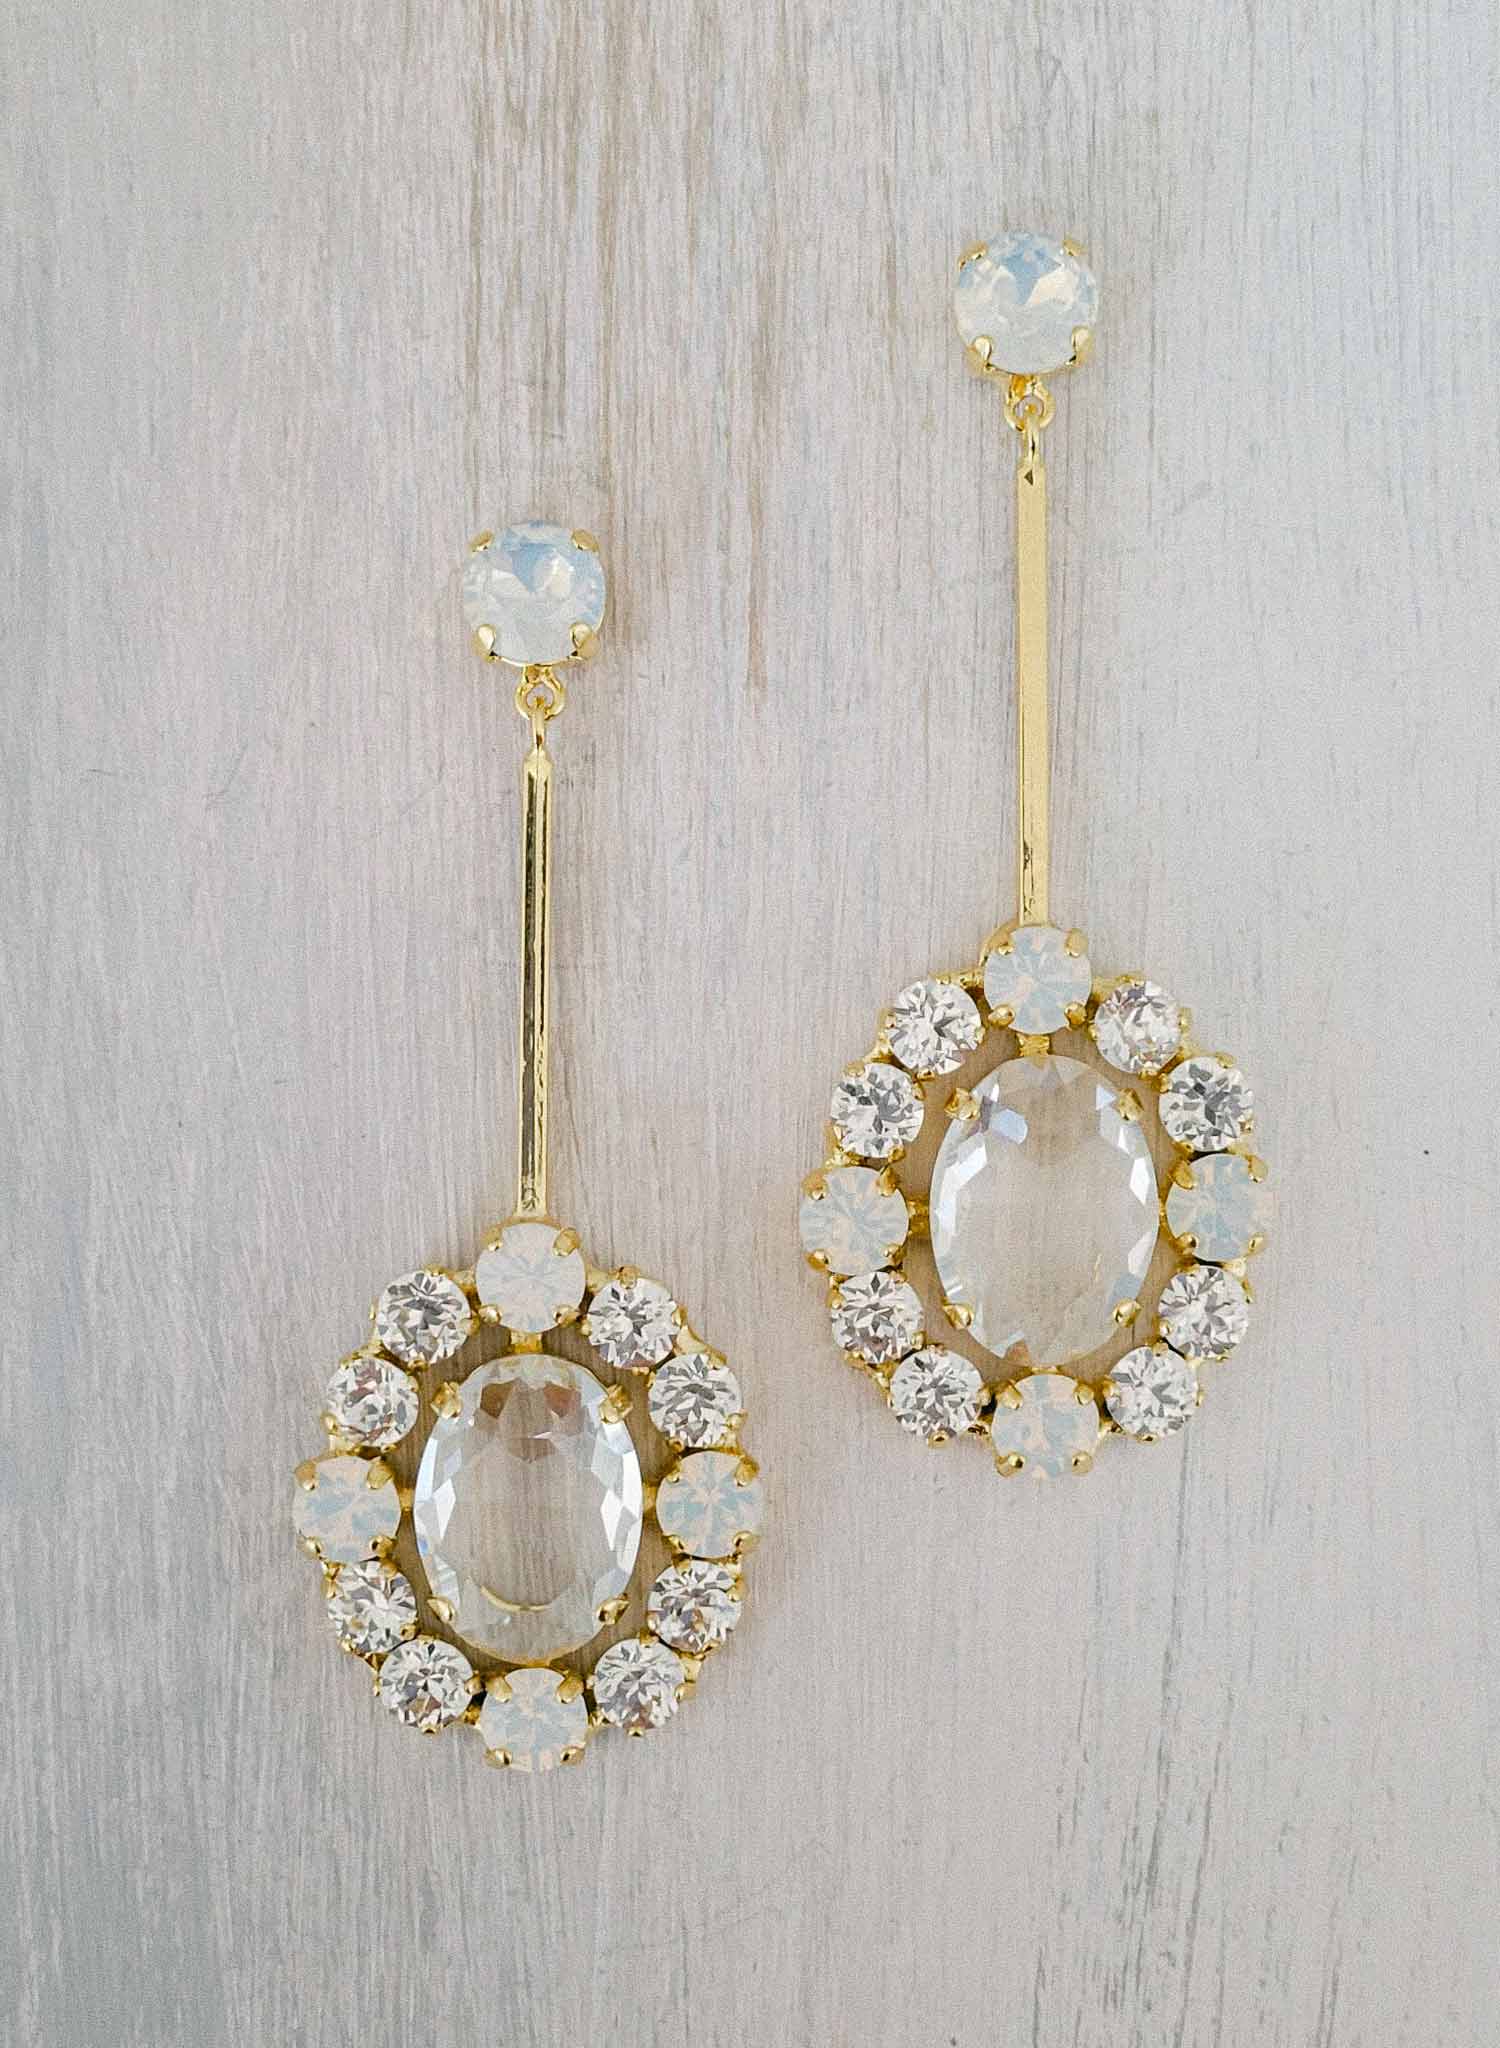 Dangling encircled oval crystal earrings - Style #2382